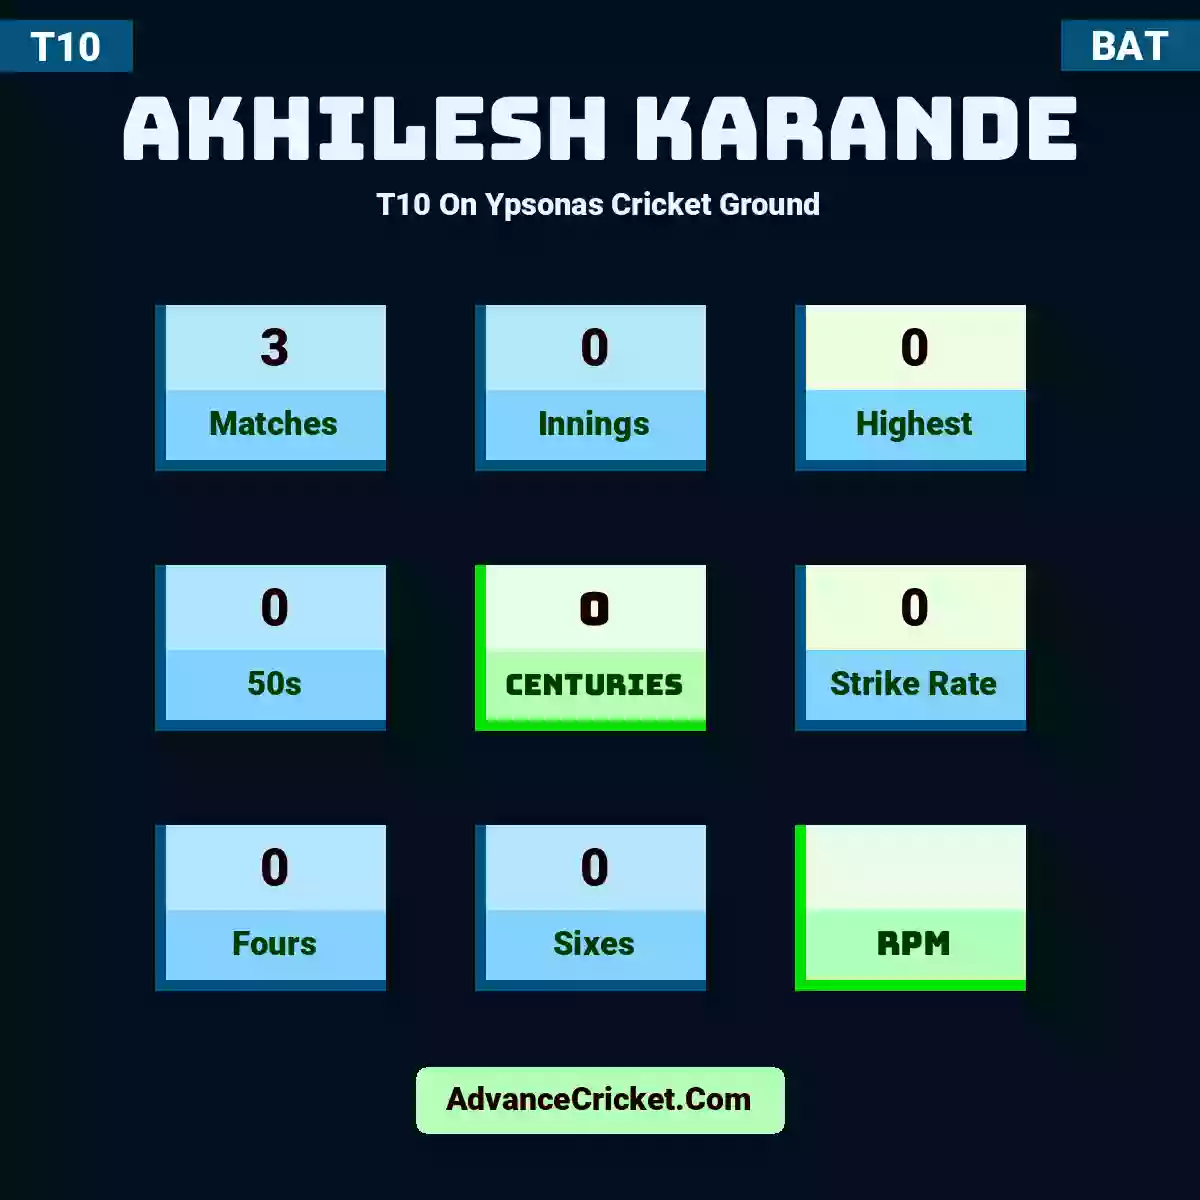 Akhilesh Karande T10  On Ypsonas Cricket Ground, Akhilesh Karande played 3 matches, scored 0 runs as highest, 0 half-centuries, and 0 centuries, with a strike rate of 0. A.Karande hit 0 fours and 0 sixes.